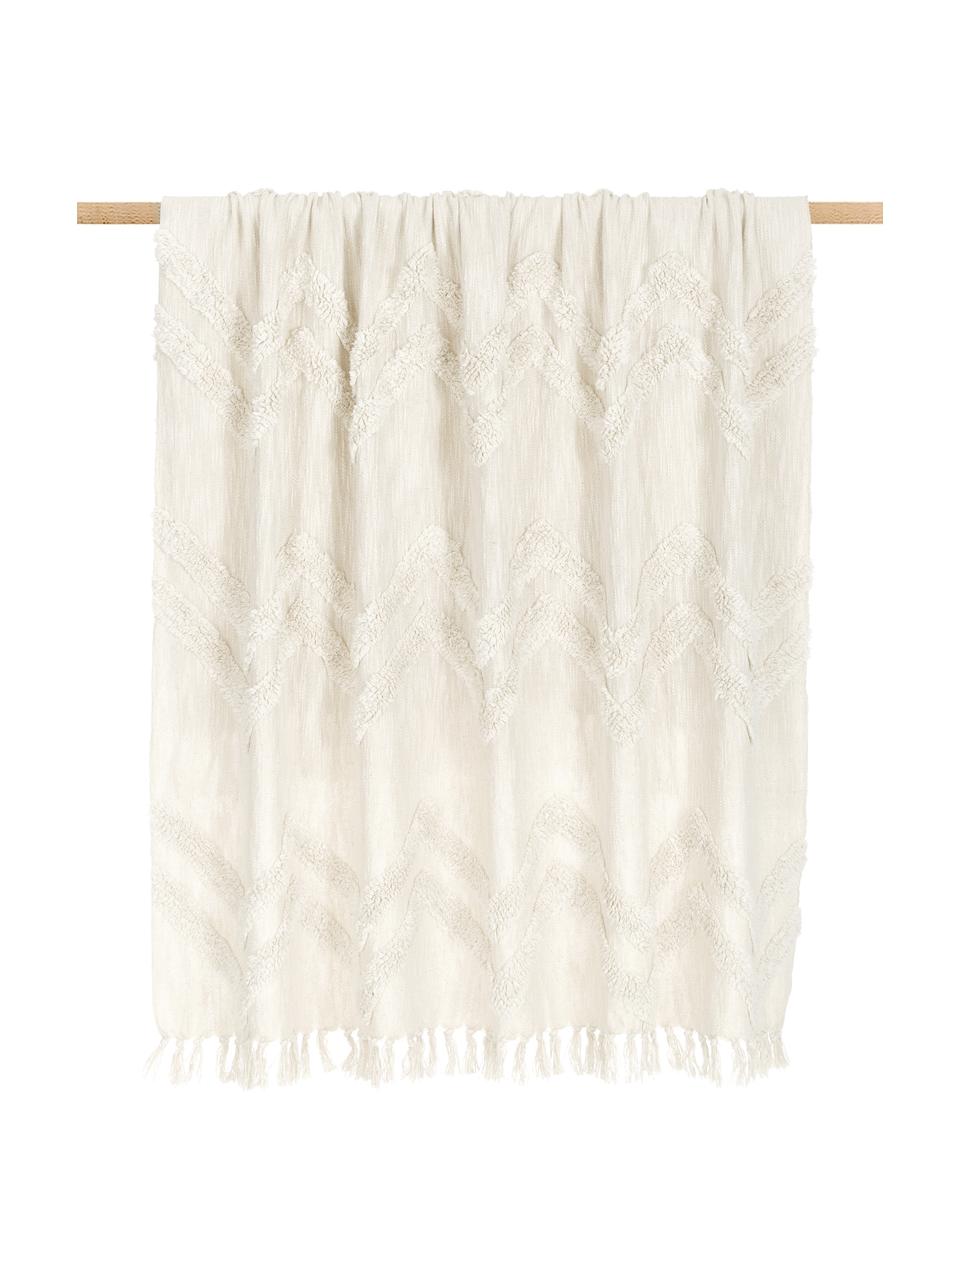 Plaid blanc écru coton bohème Akesha, 100 % coton, Écru, larg. 130 x long. 170 cm